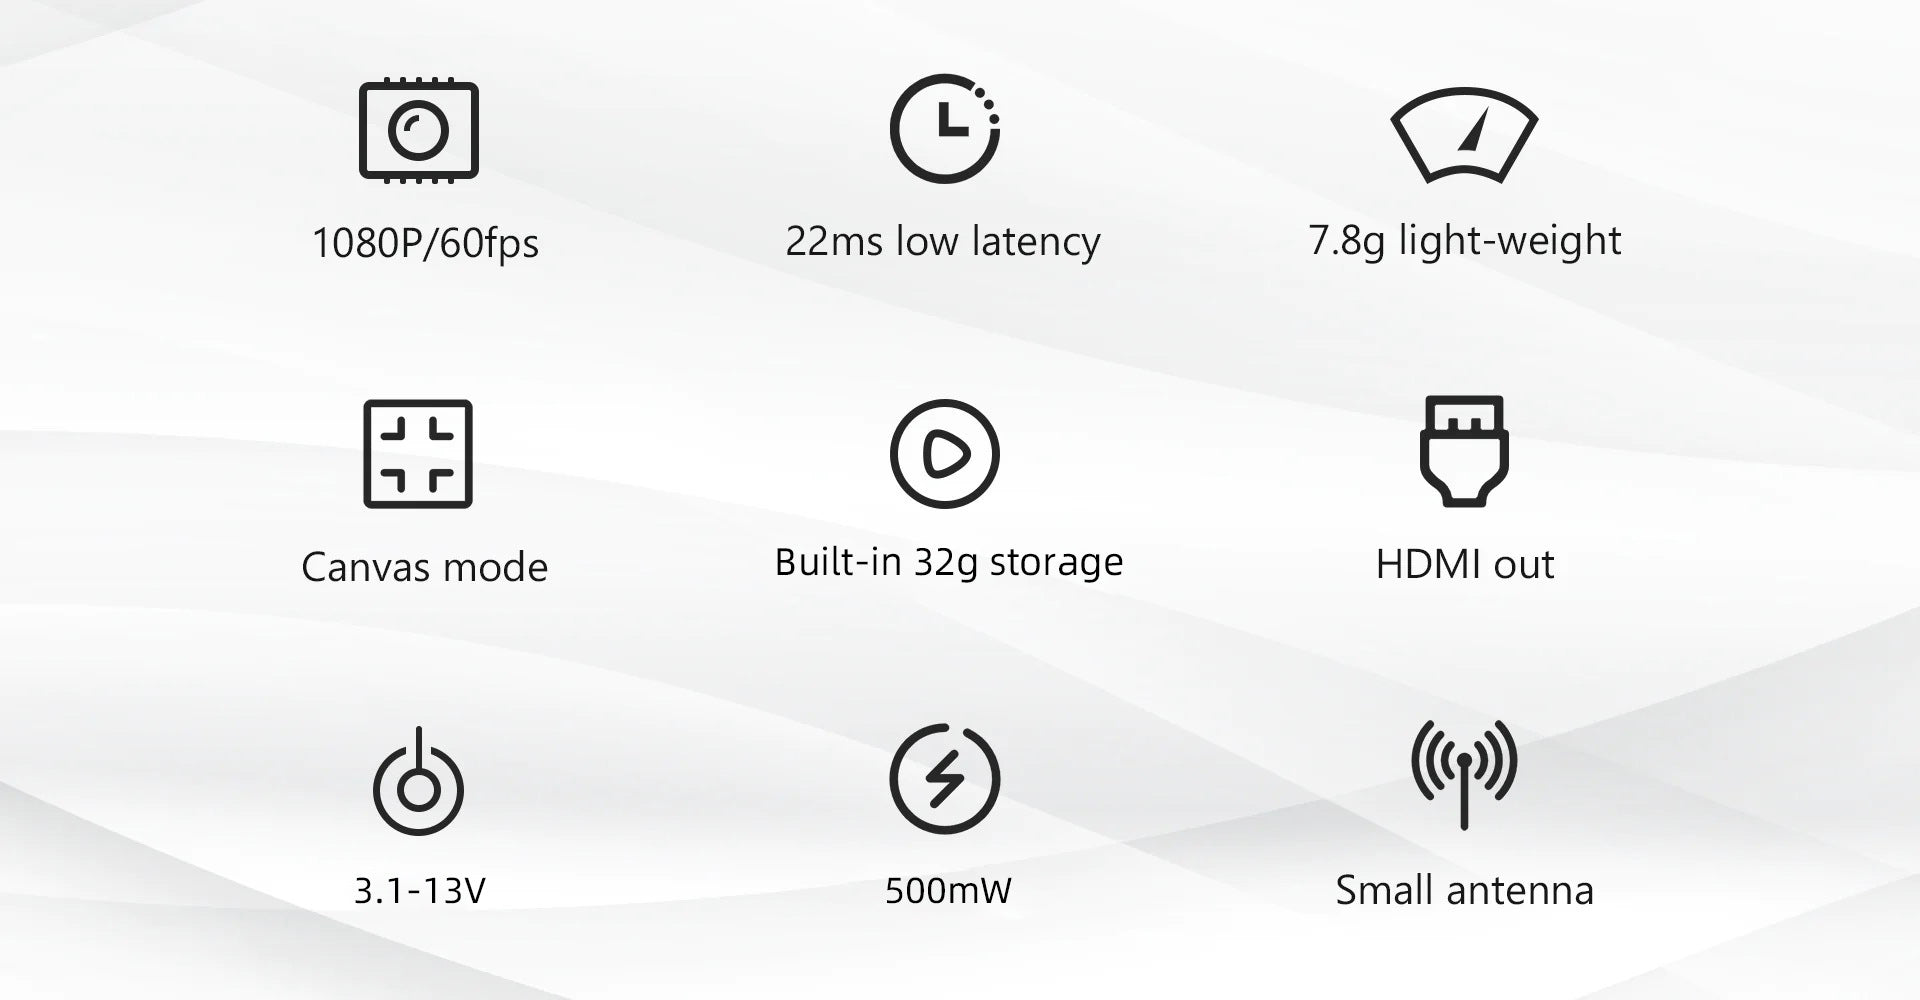 Walksnail Avatar HD Mini 1s Lite Kit, 1080P/60fps 22ms low latency 7.8g light-